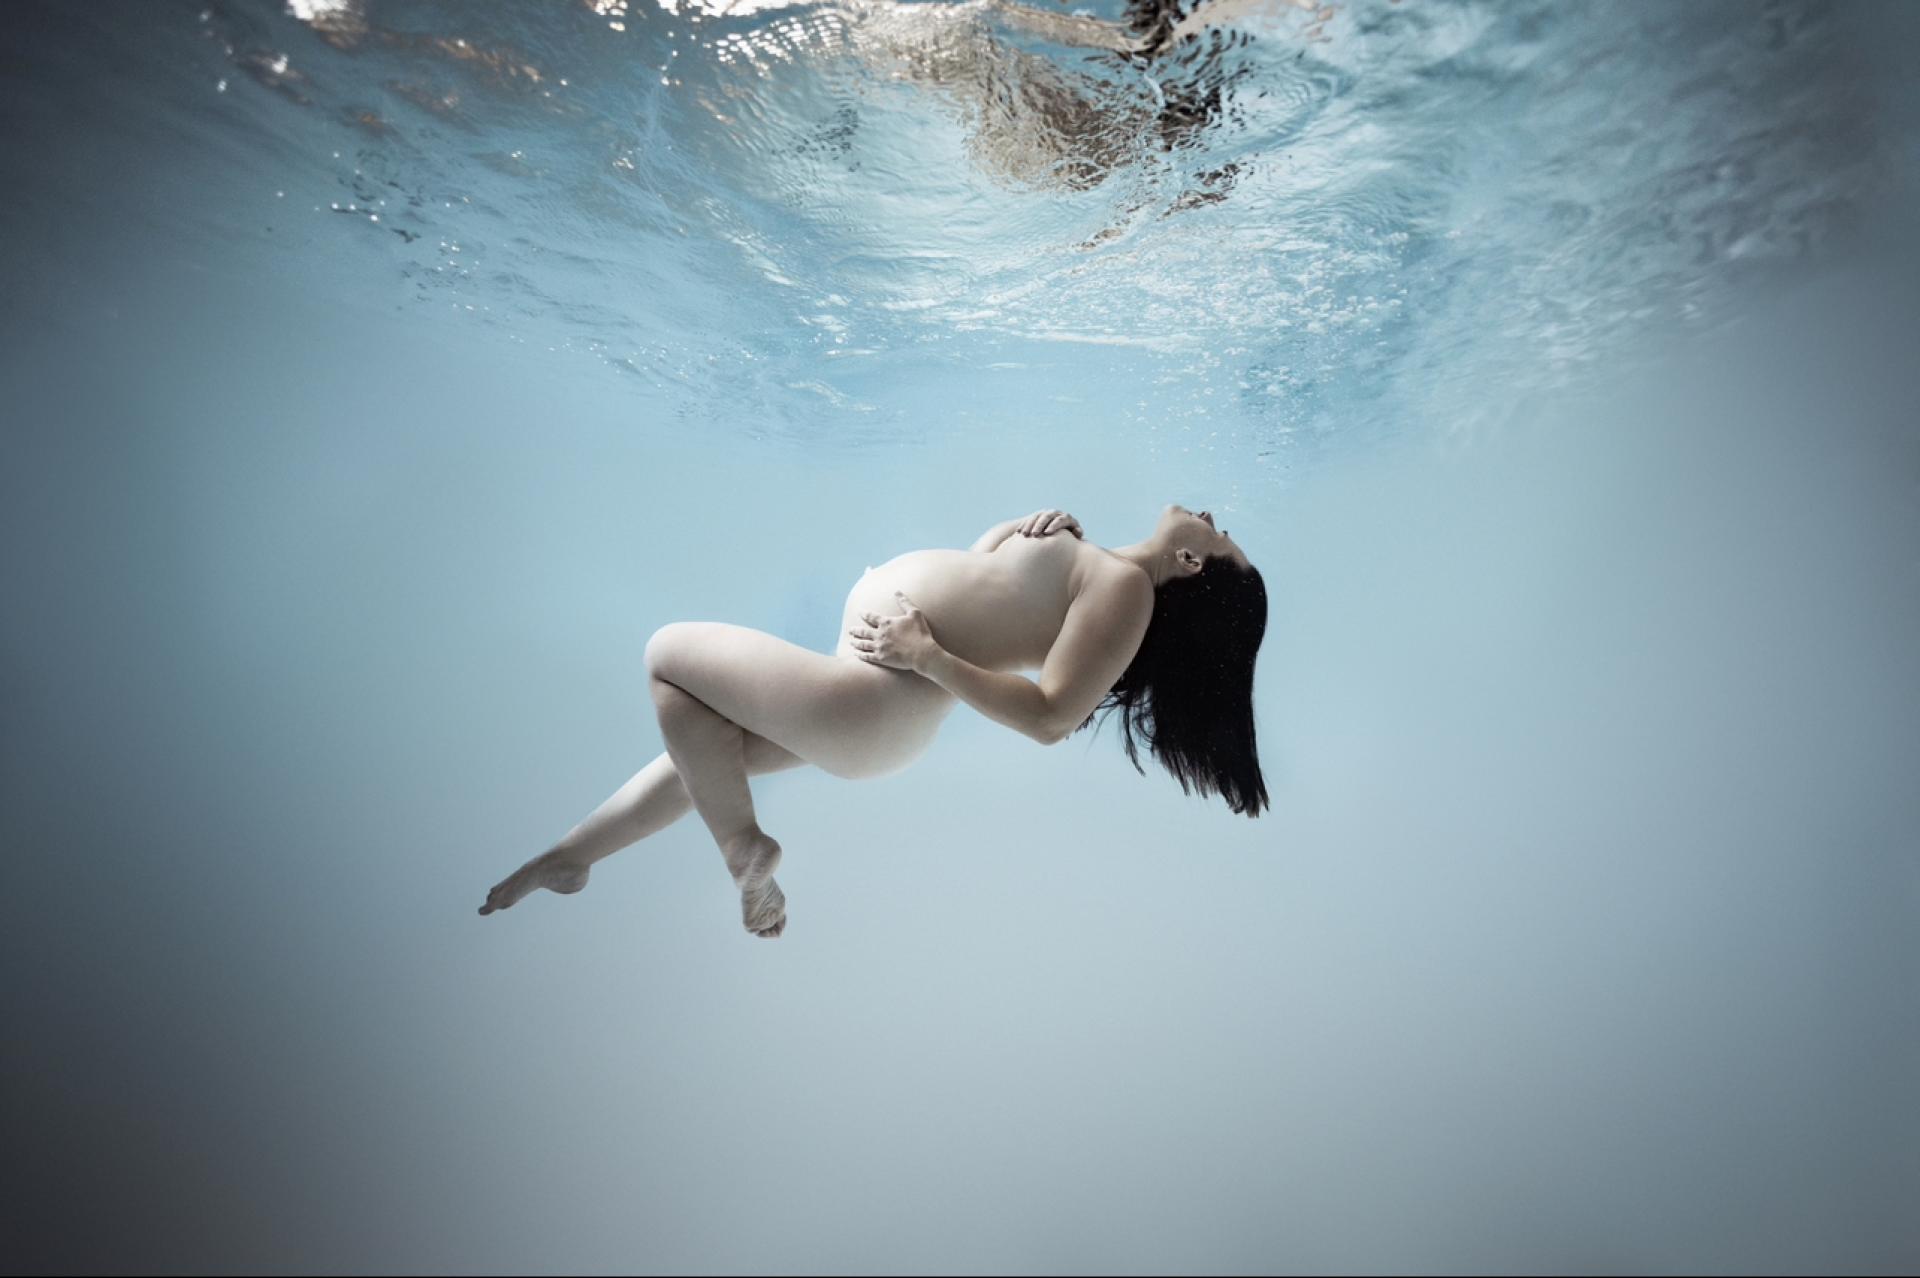 European Photography Awards Winner - Floating